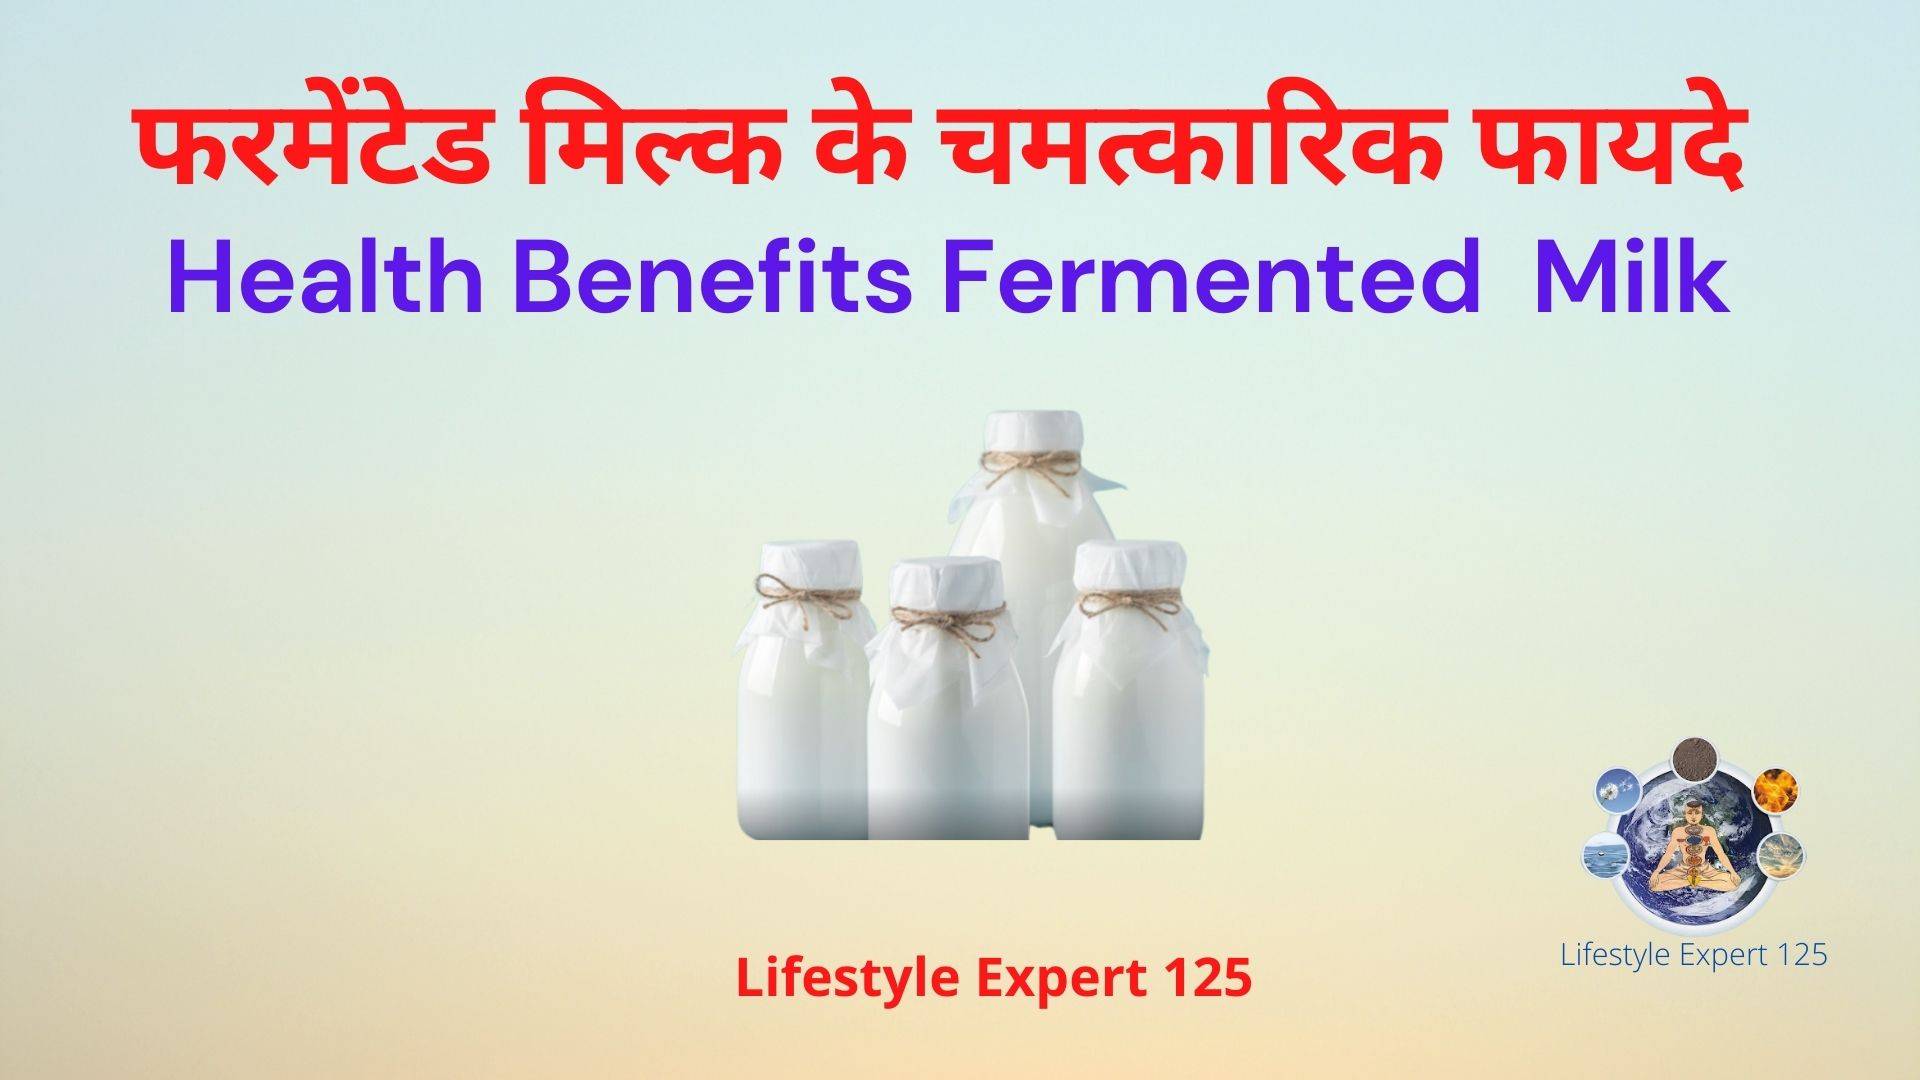 Fermented Milk benefits